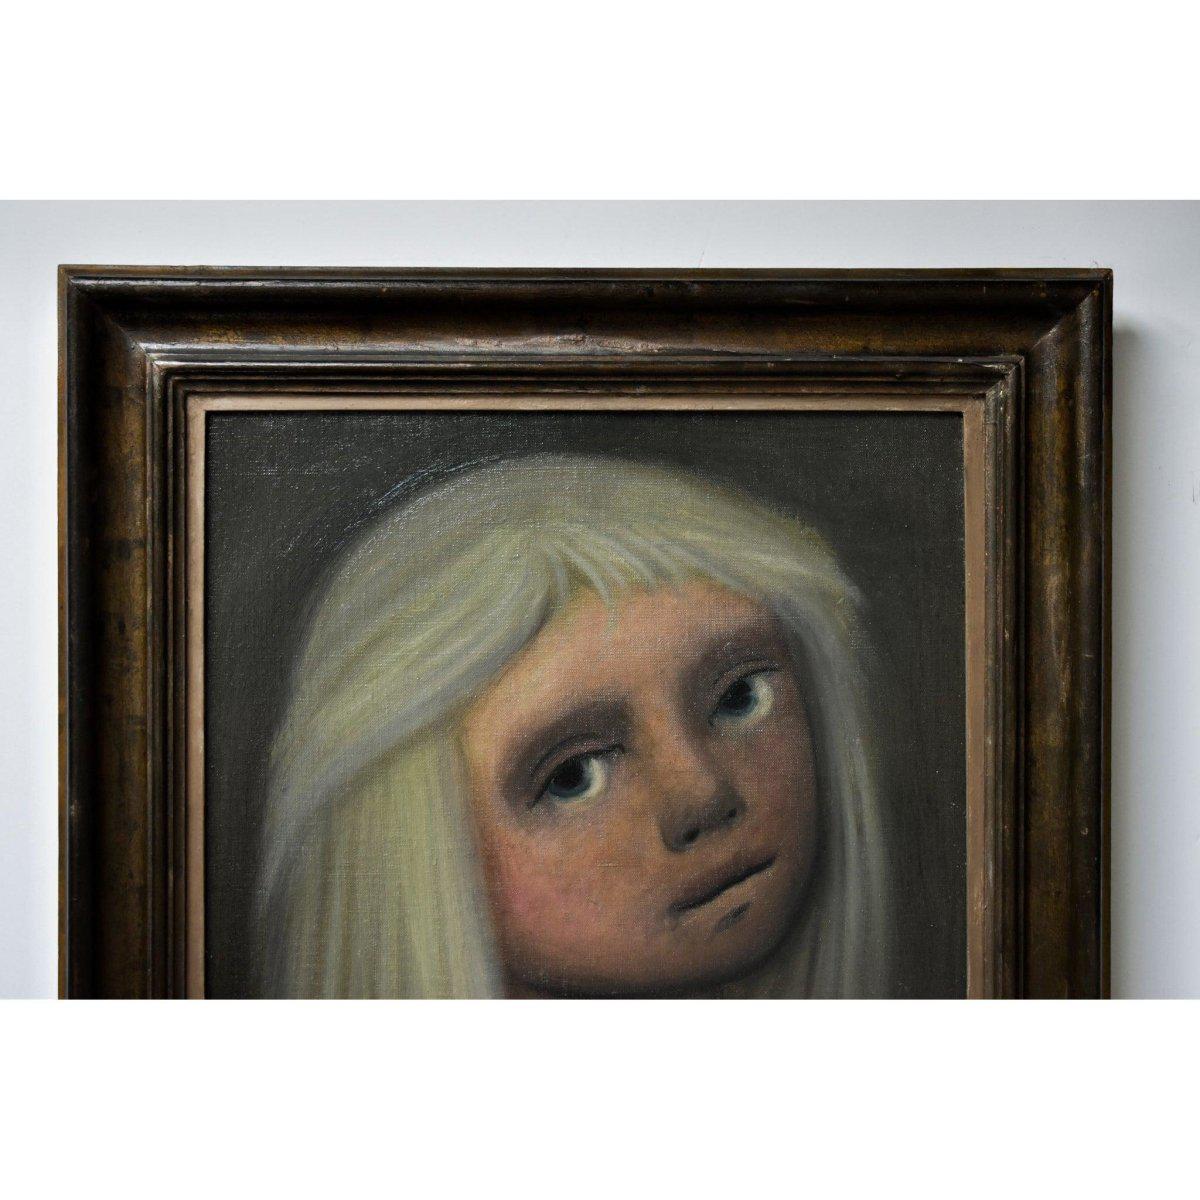 Vintage portrait oil painting girl original 1963 by Primaldo Monaco for sale at Winckelmann Gallery